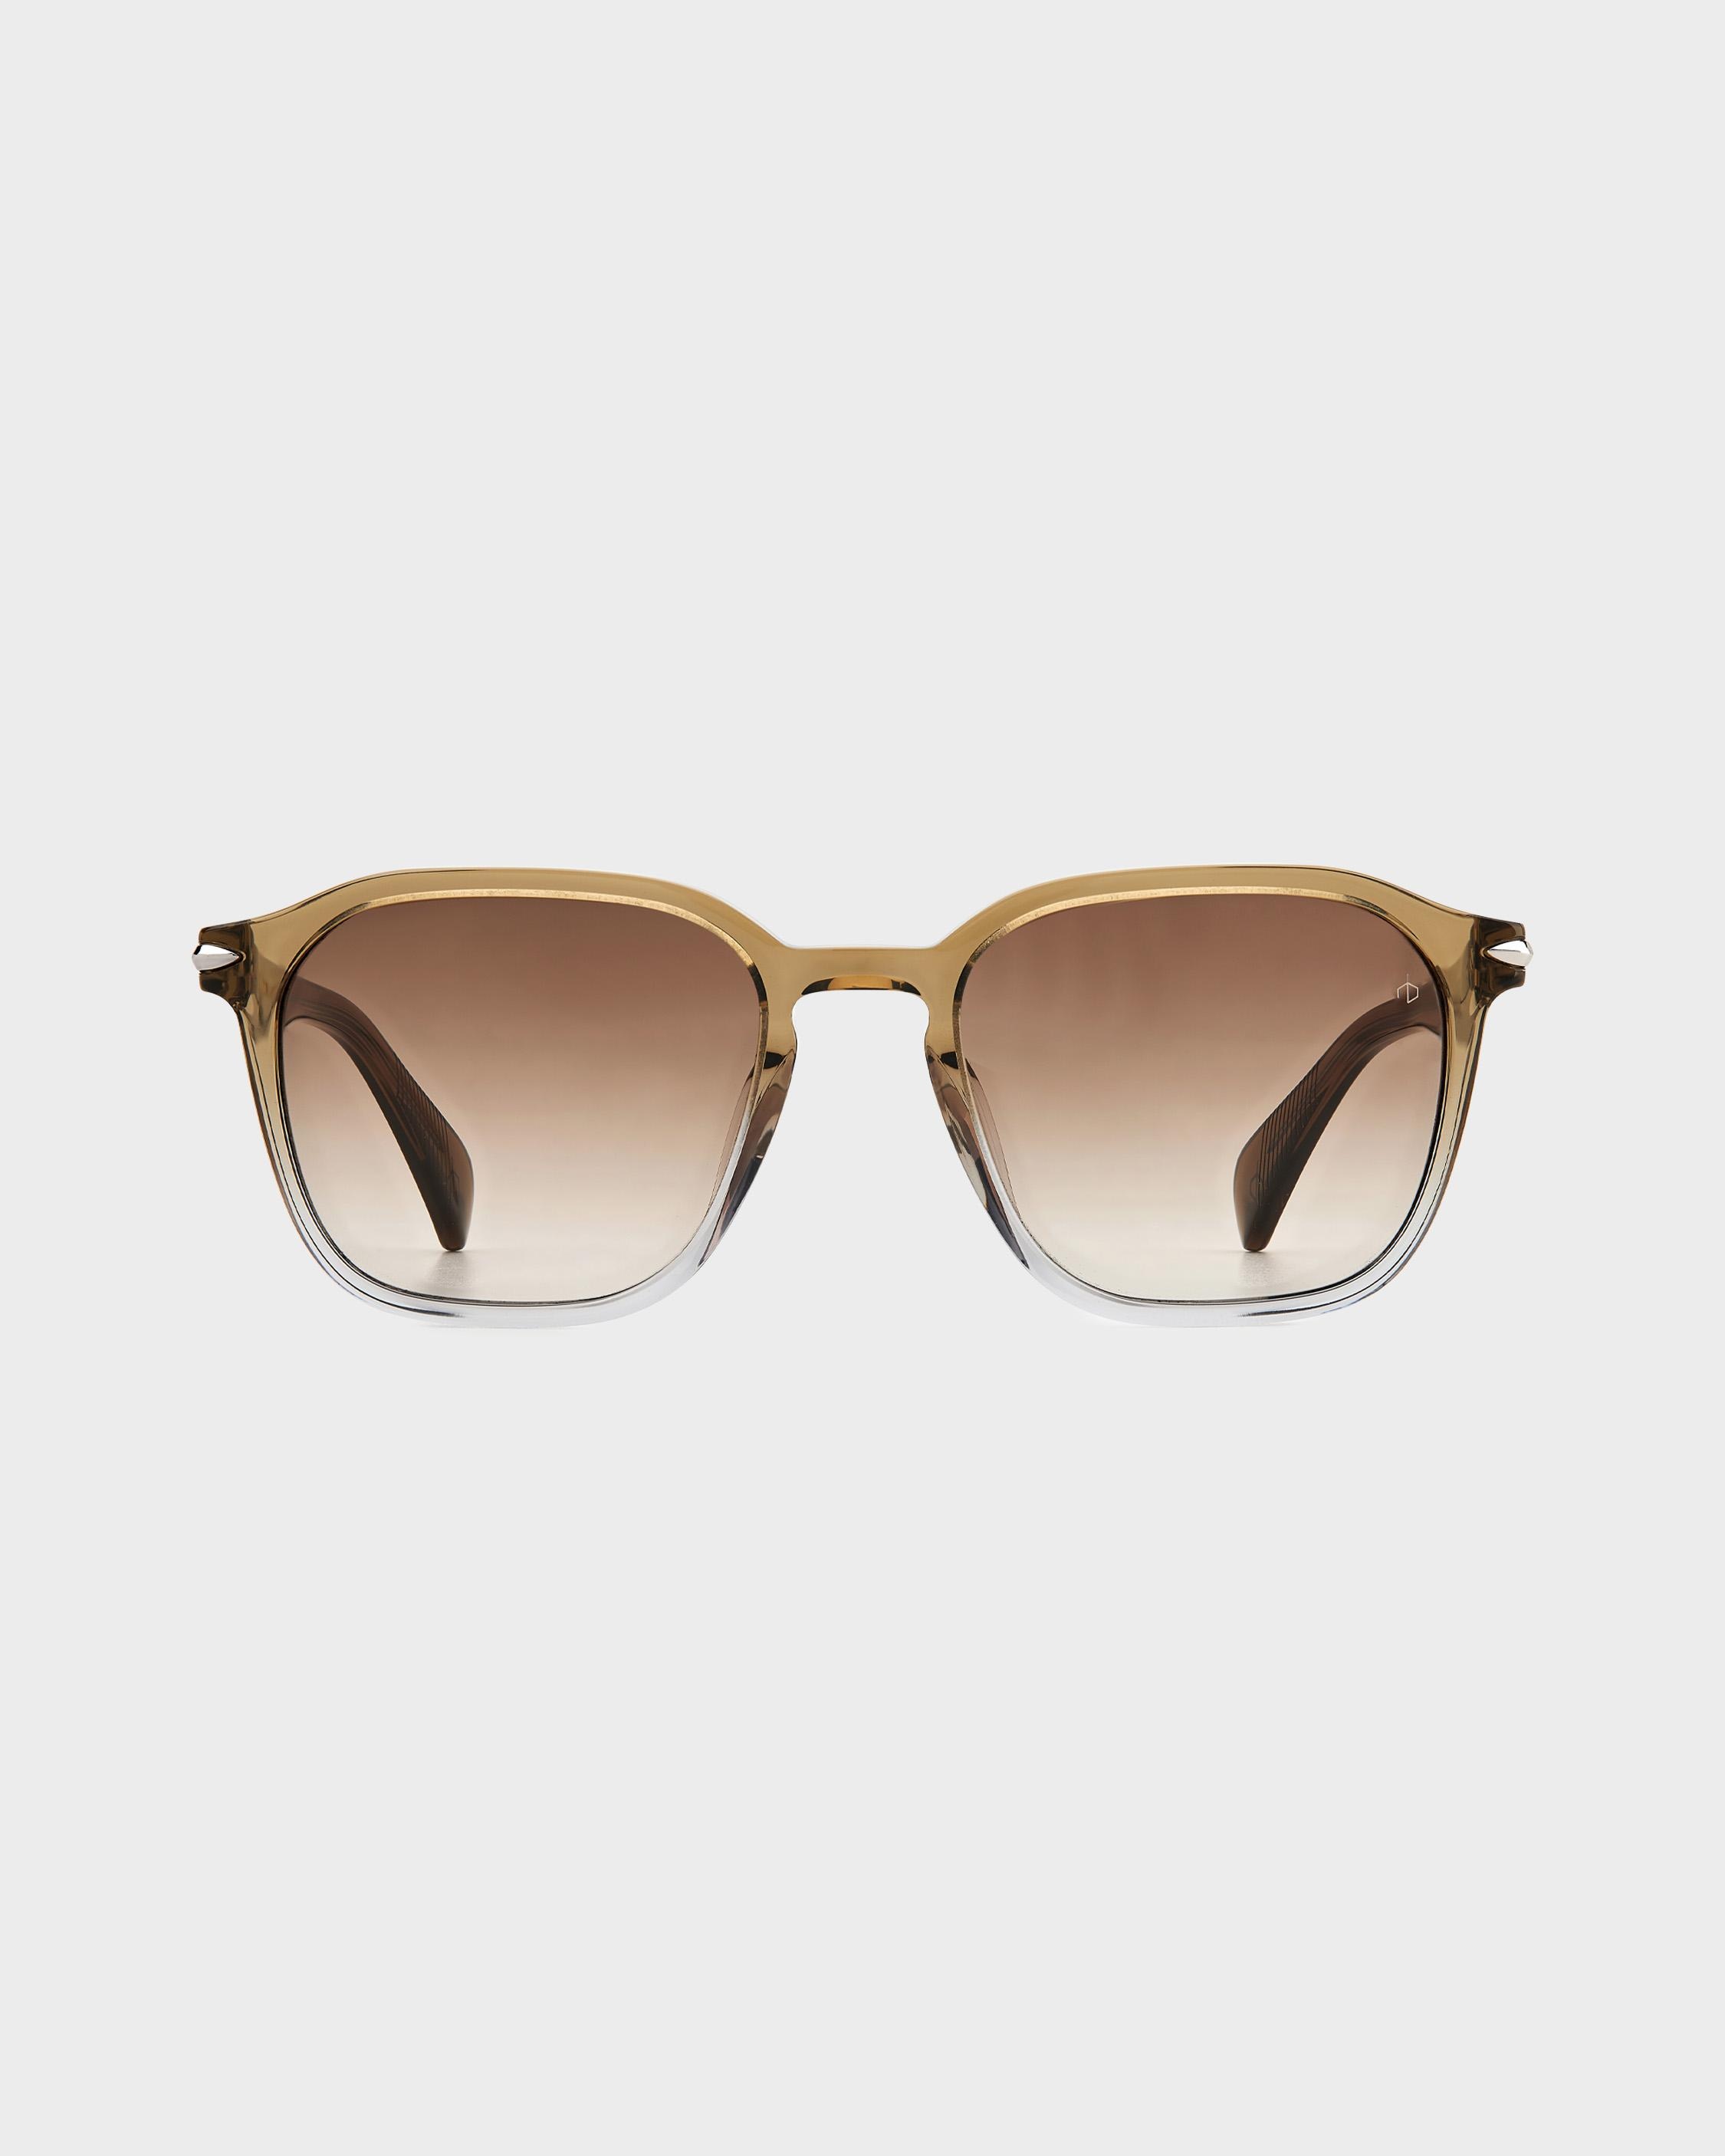 Parker
Square Sunglasses - 2